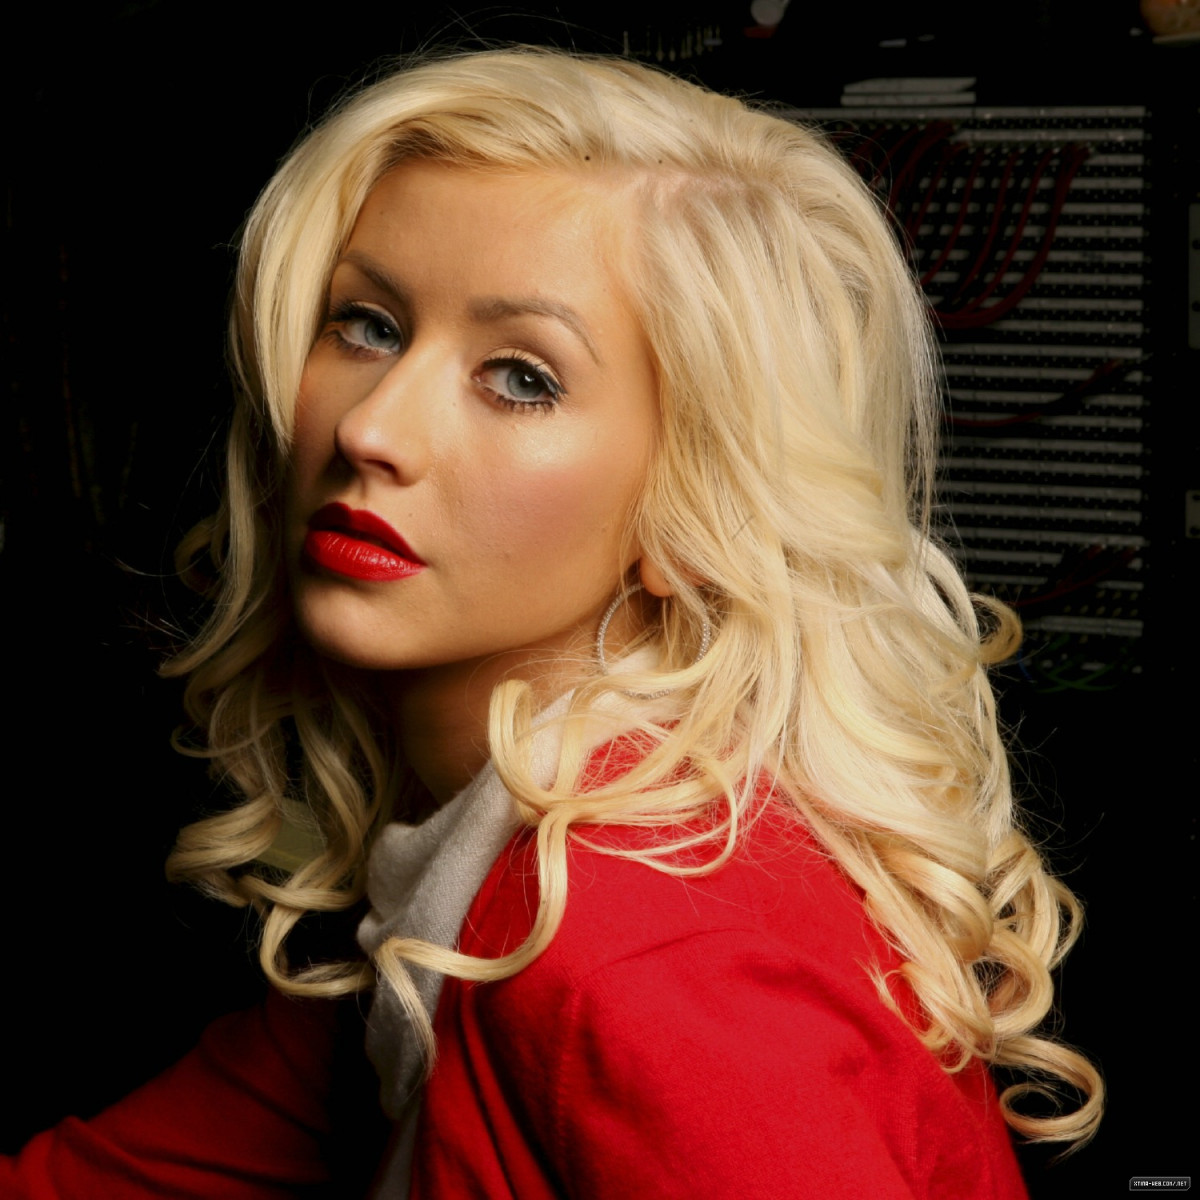 Christina Aguilera photo 1769 of 10845 pics, wallpaper - photo #166232 ...